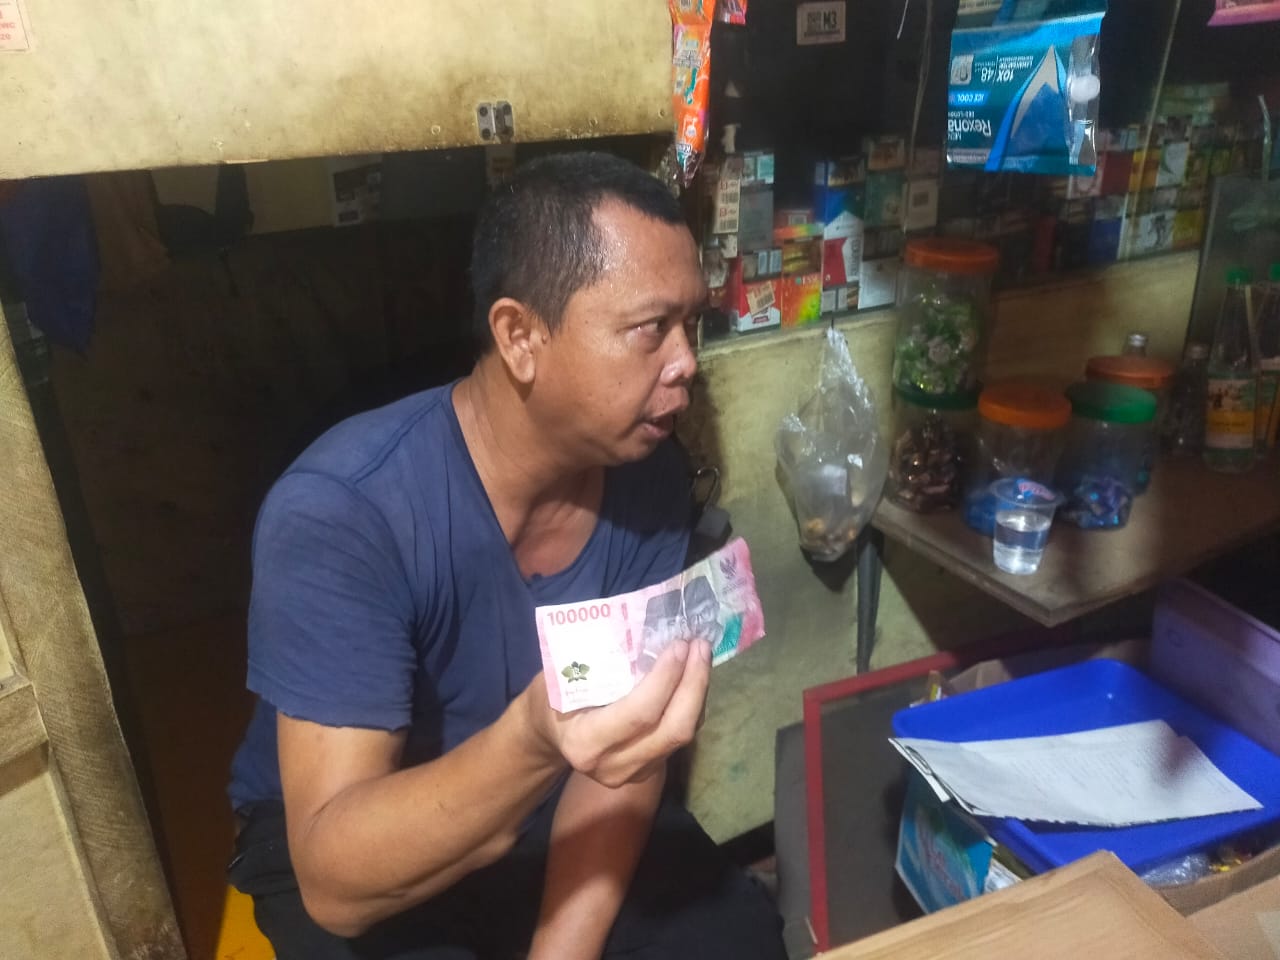 Pedagang Kopi Ditipu Pembeli Pakai Uang Palsu Pecahan Rp 100 Ribu